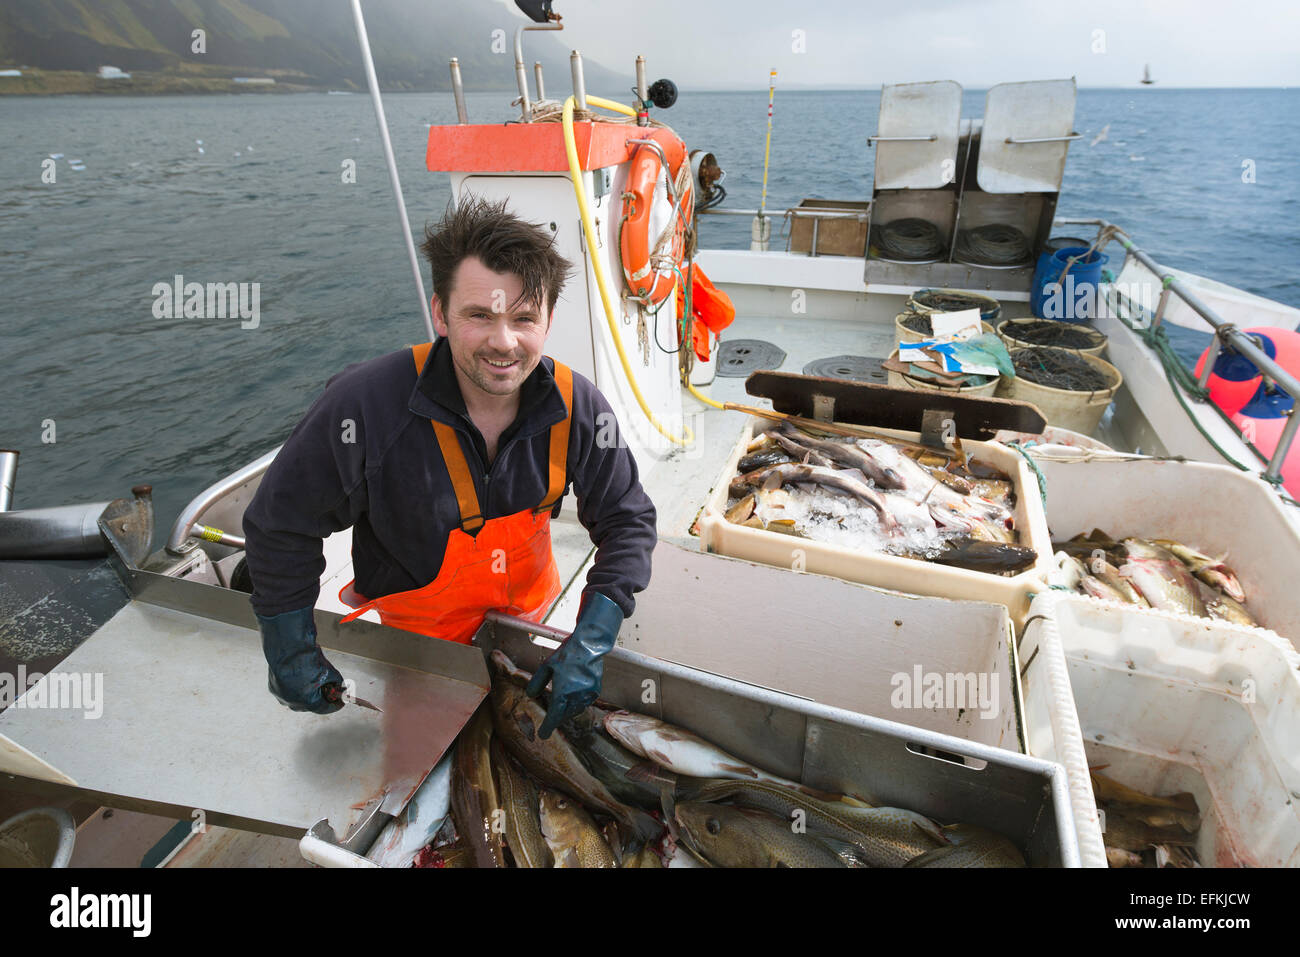 Fisherman gutting fish on boat Stock Photo